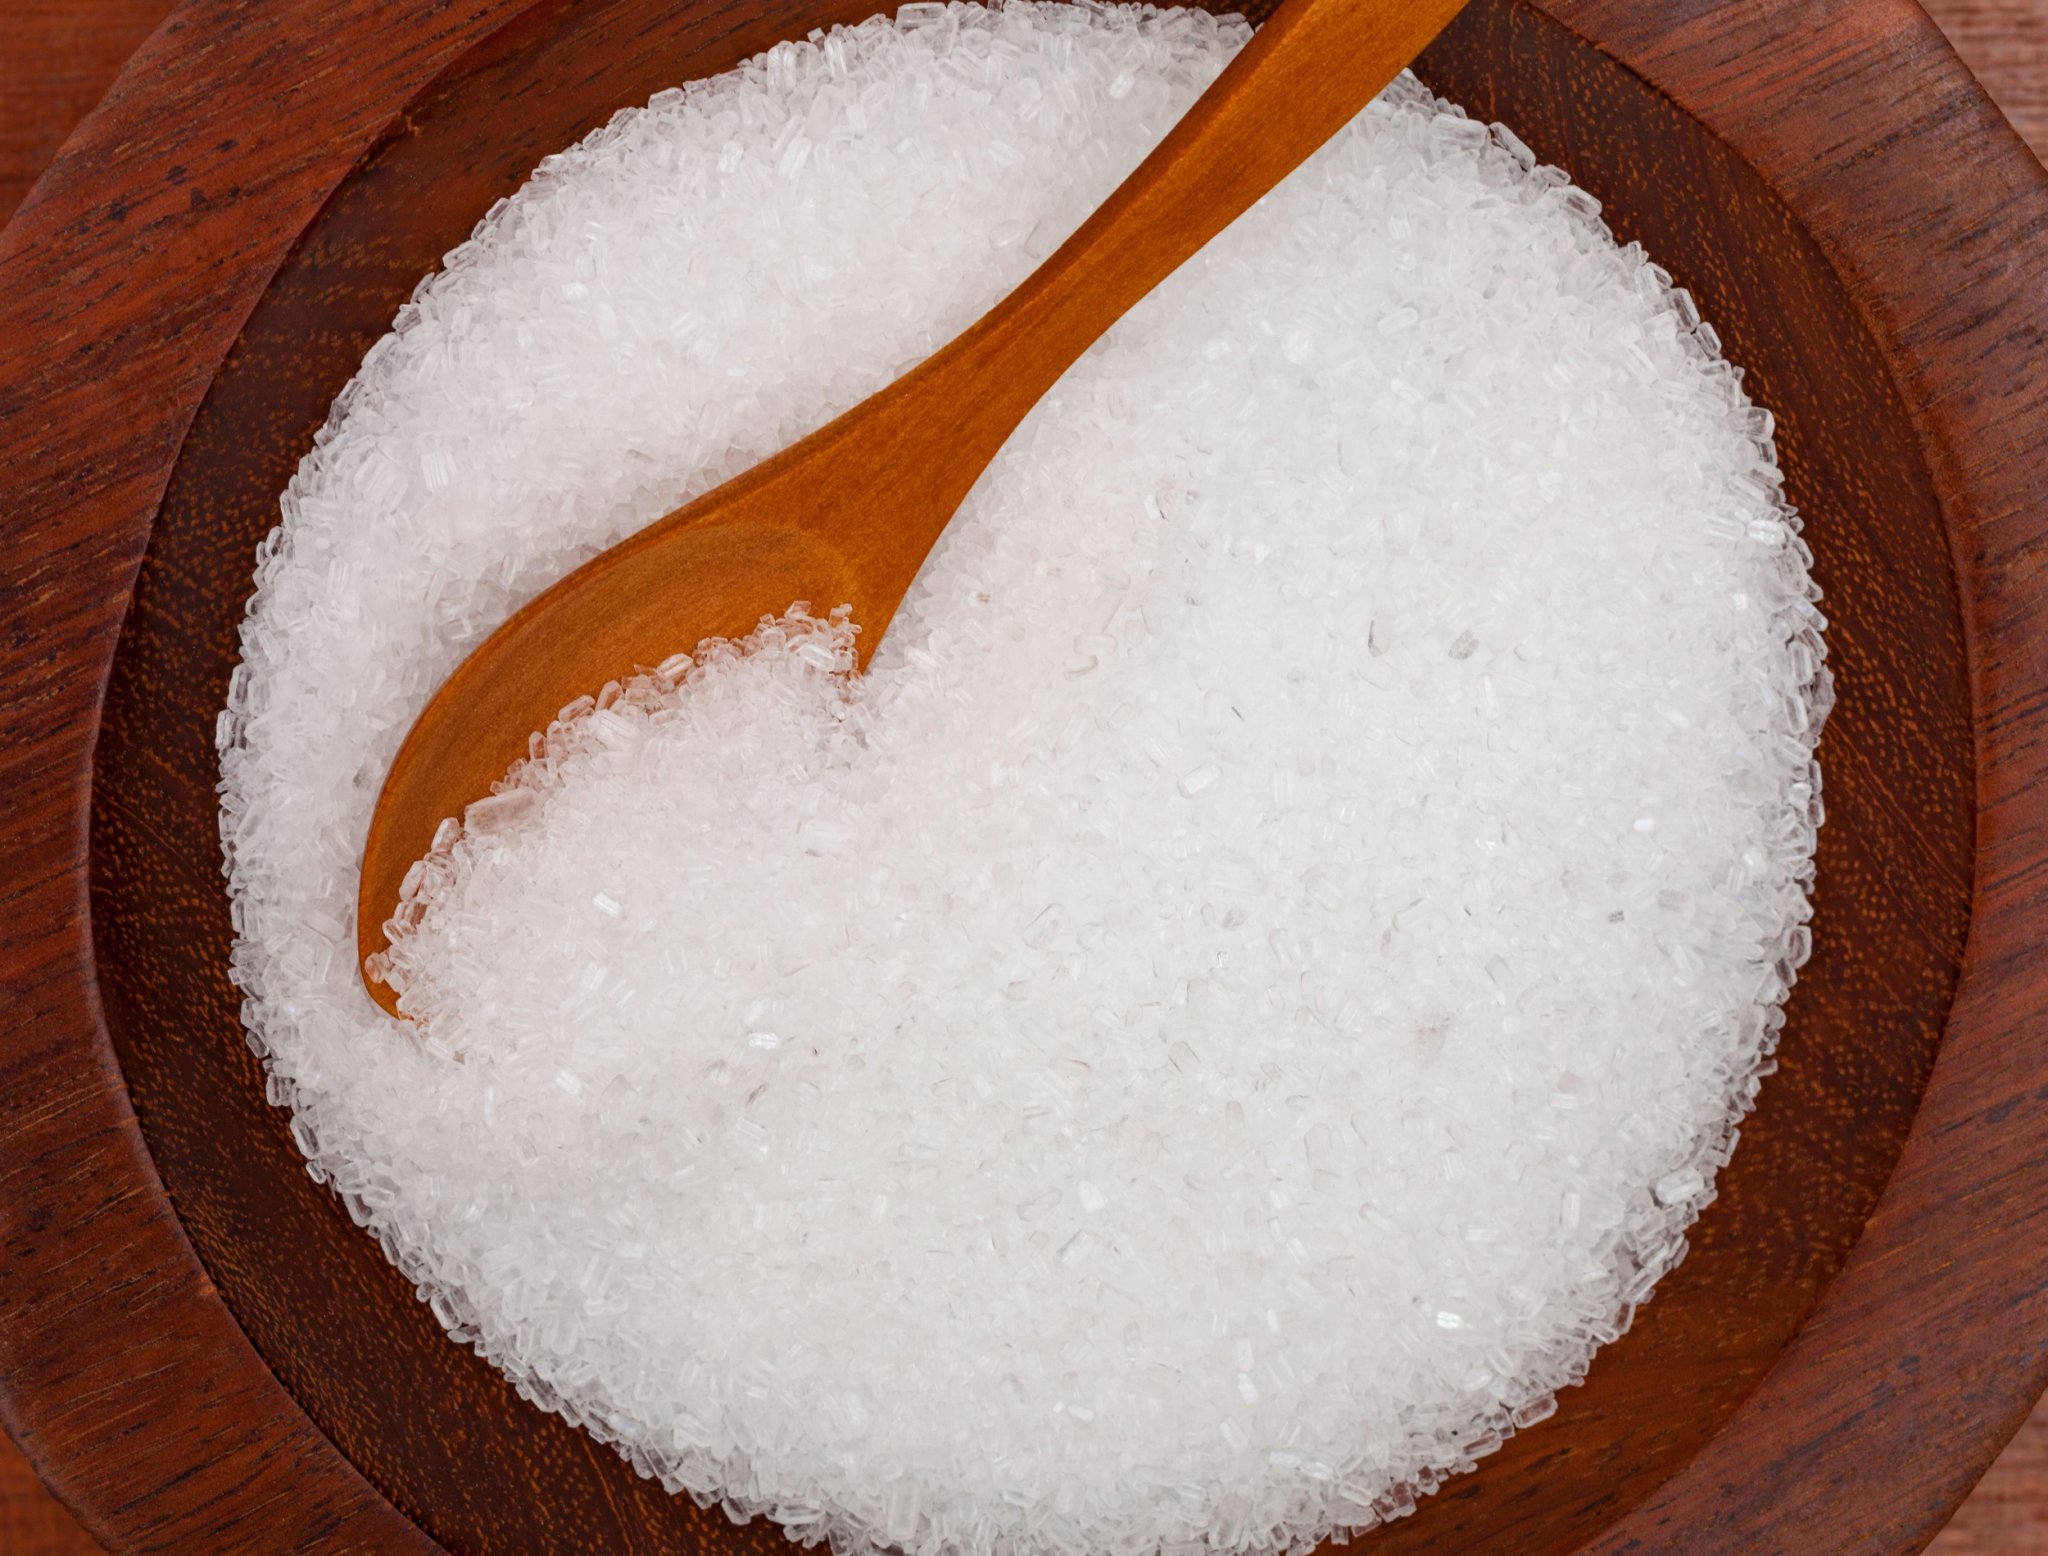 Why You Should Use Epsom Salt on Your Lemon Tree